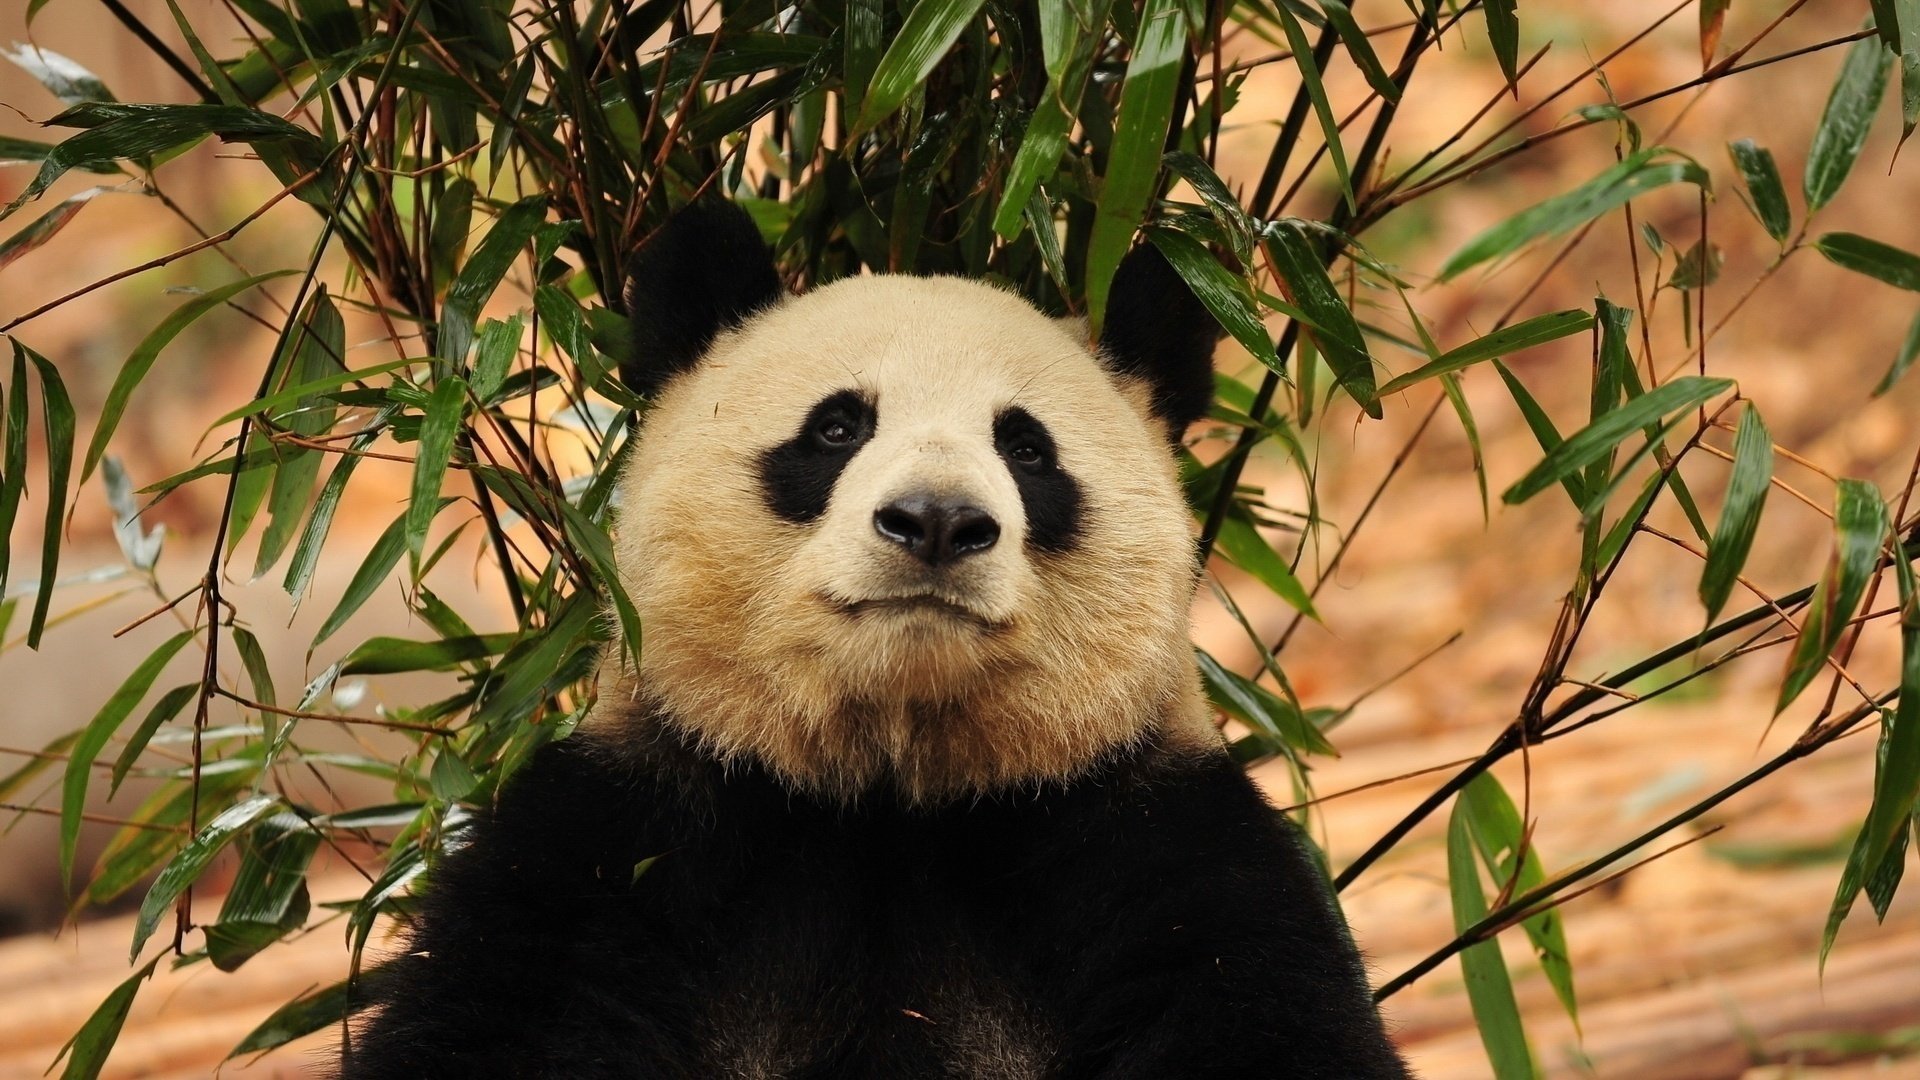 Panda is sitting under a bamboo tree